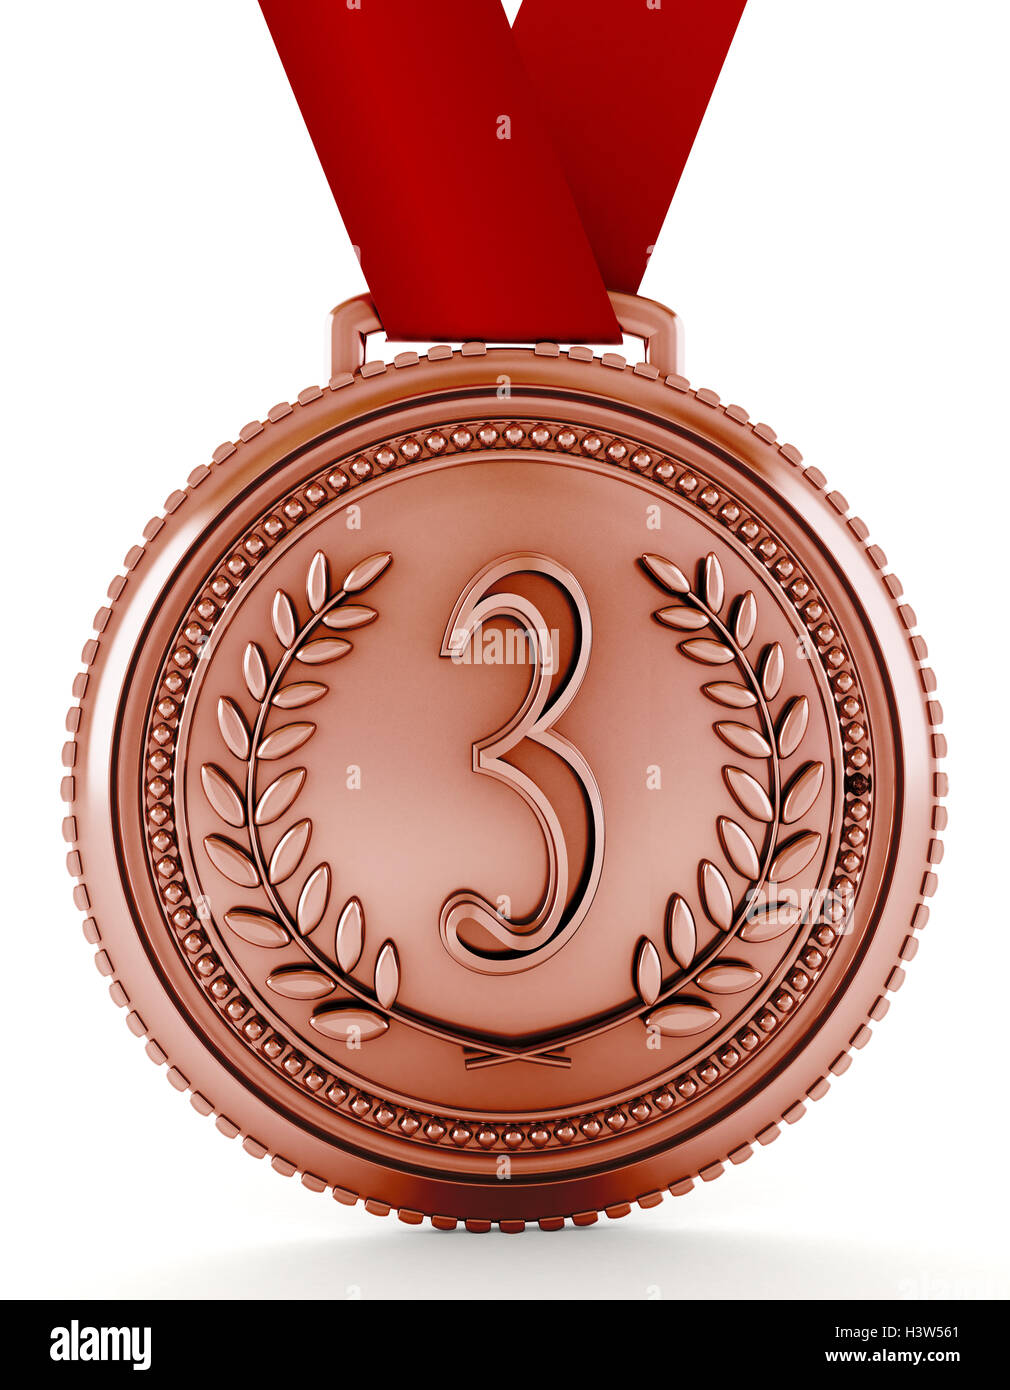 Bronze-Medaille mit Platz drei. 3D Illustration Stockfotografie - Alamy